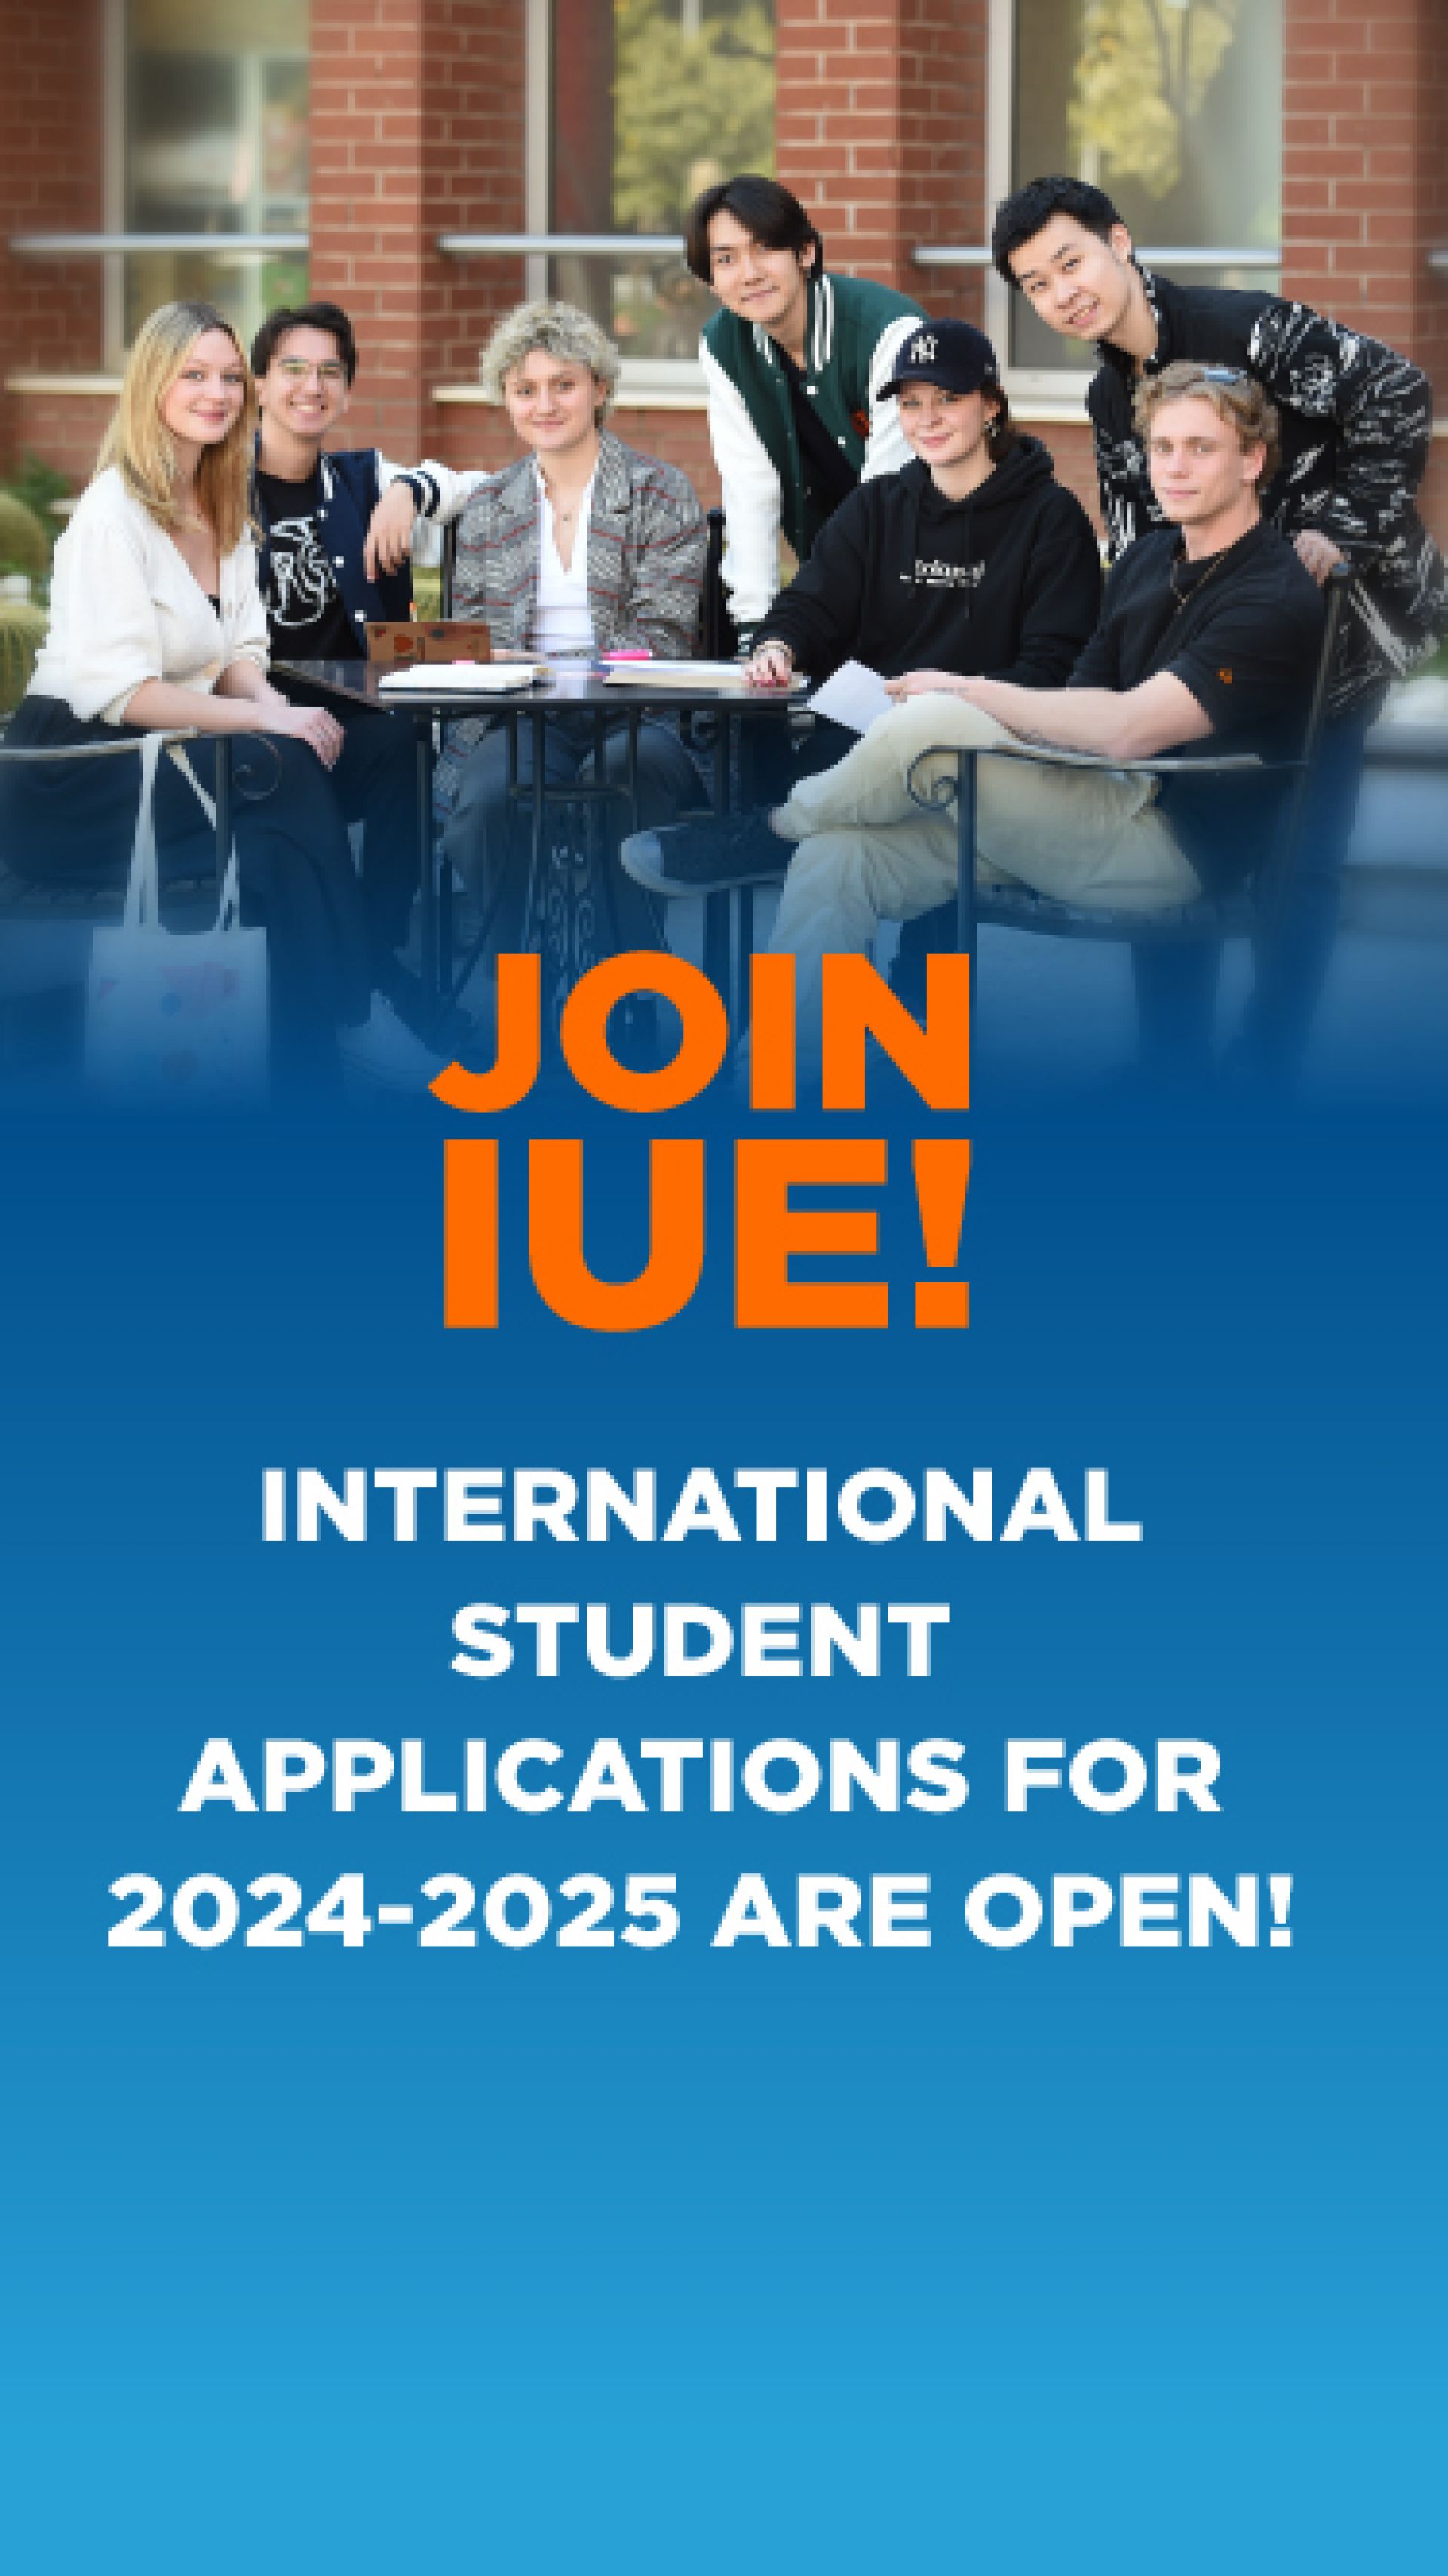 International Student Application is Open